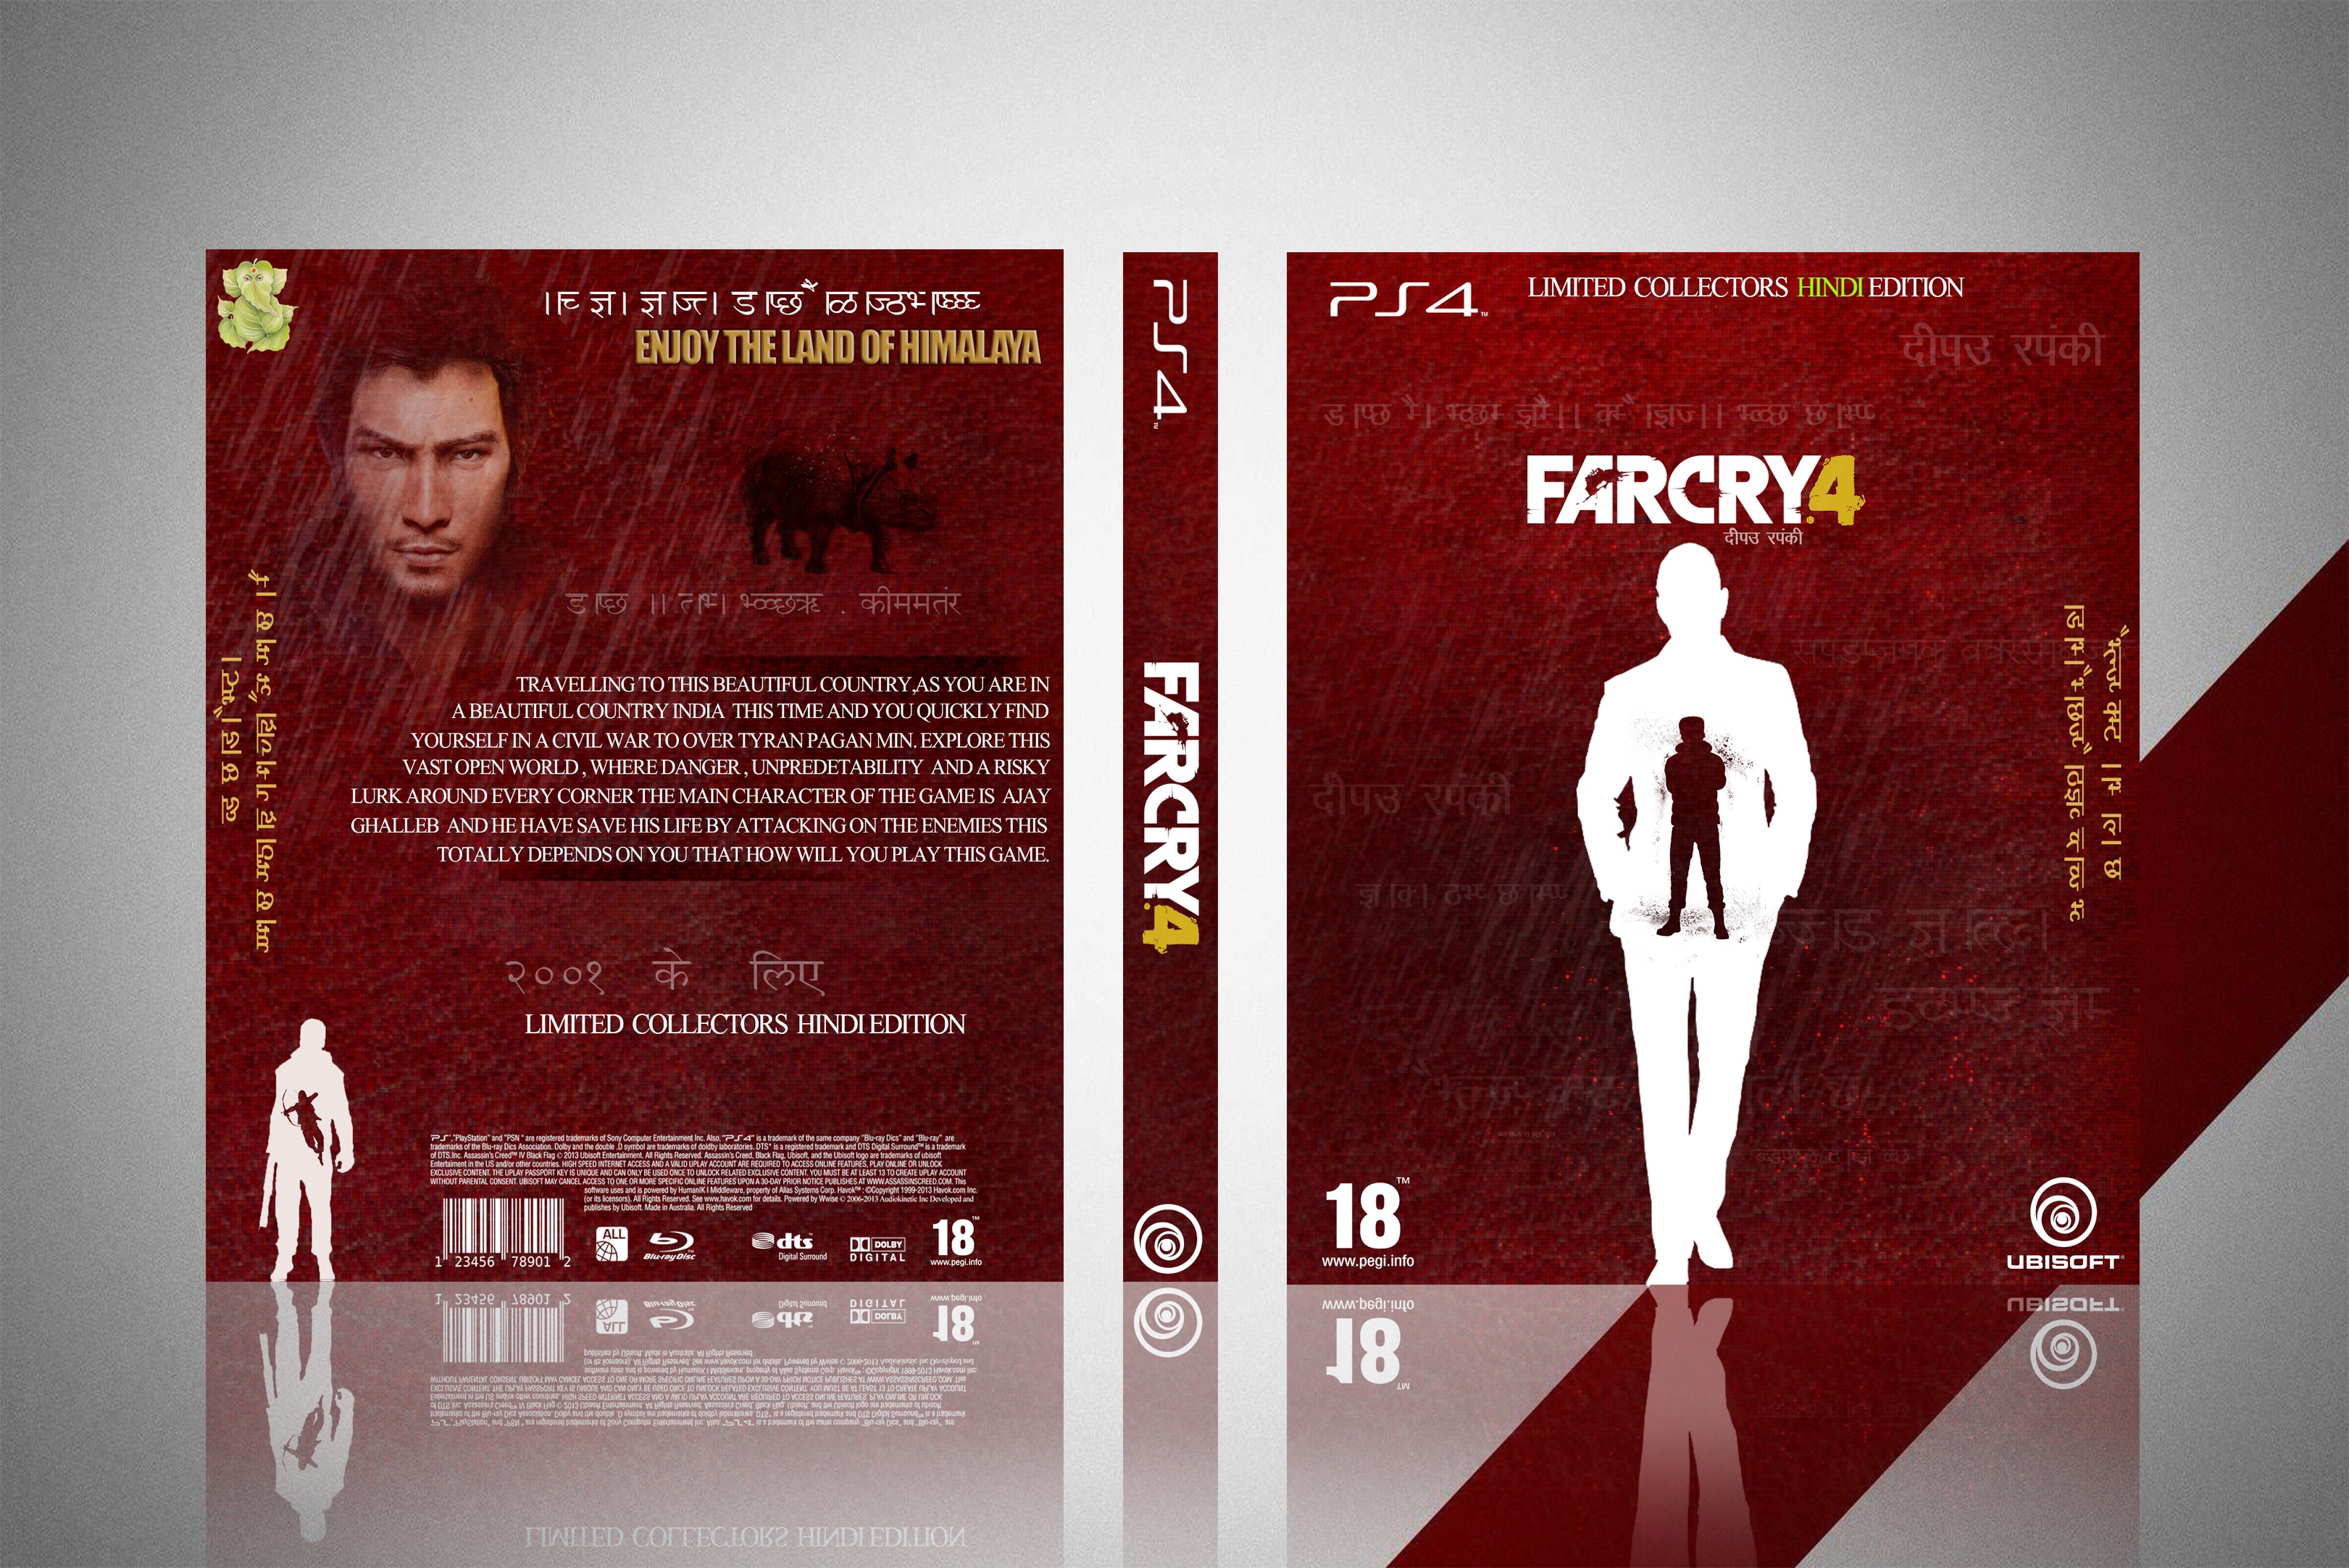 Far Cry 4 : Limited collectors HINDI Edition box cover